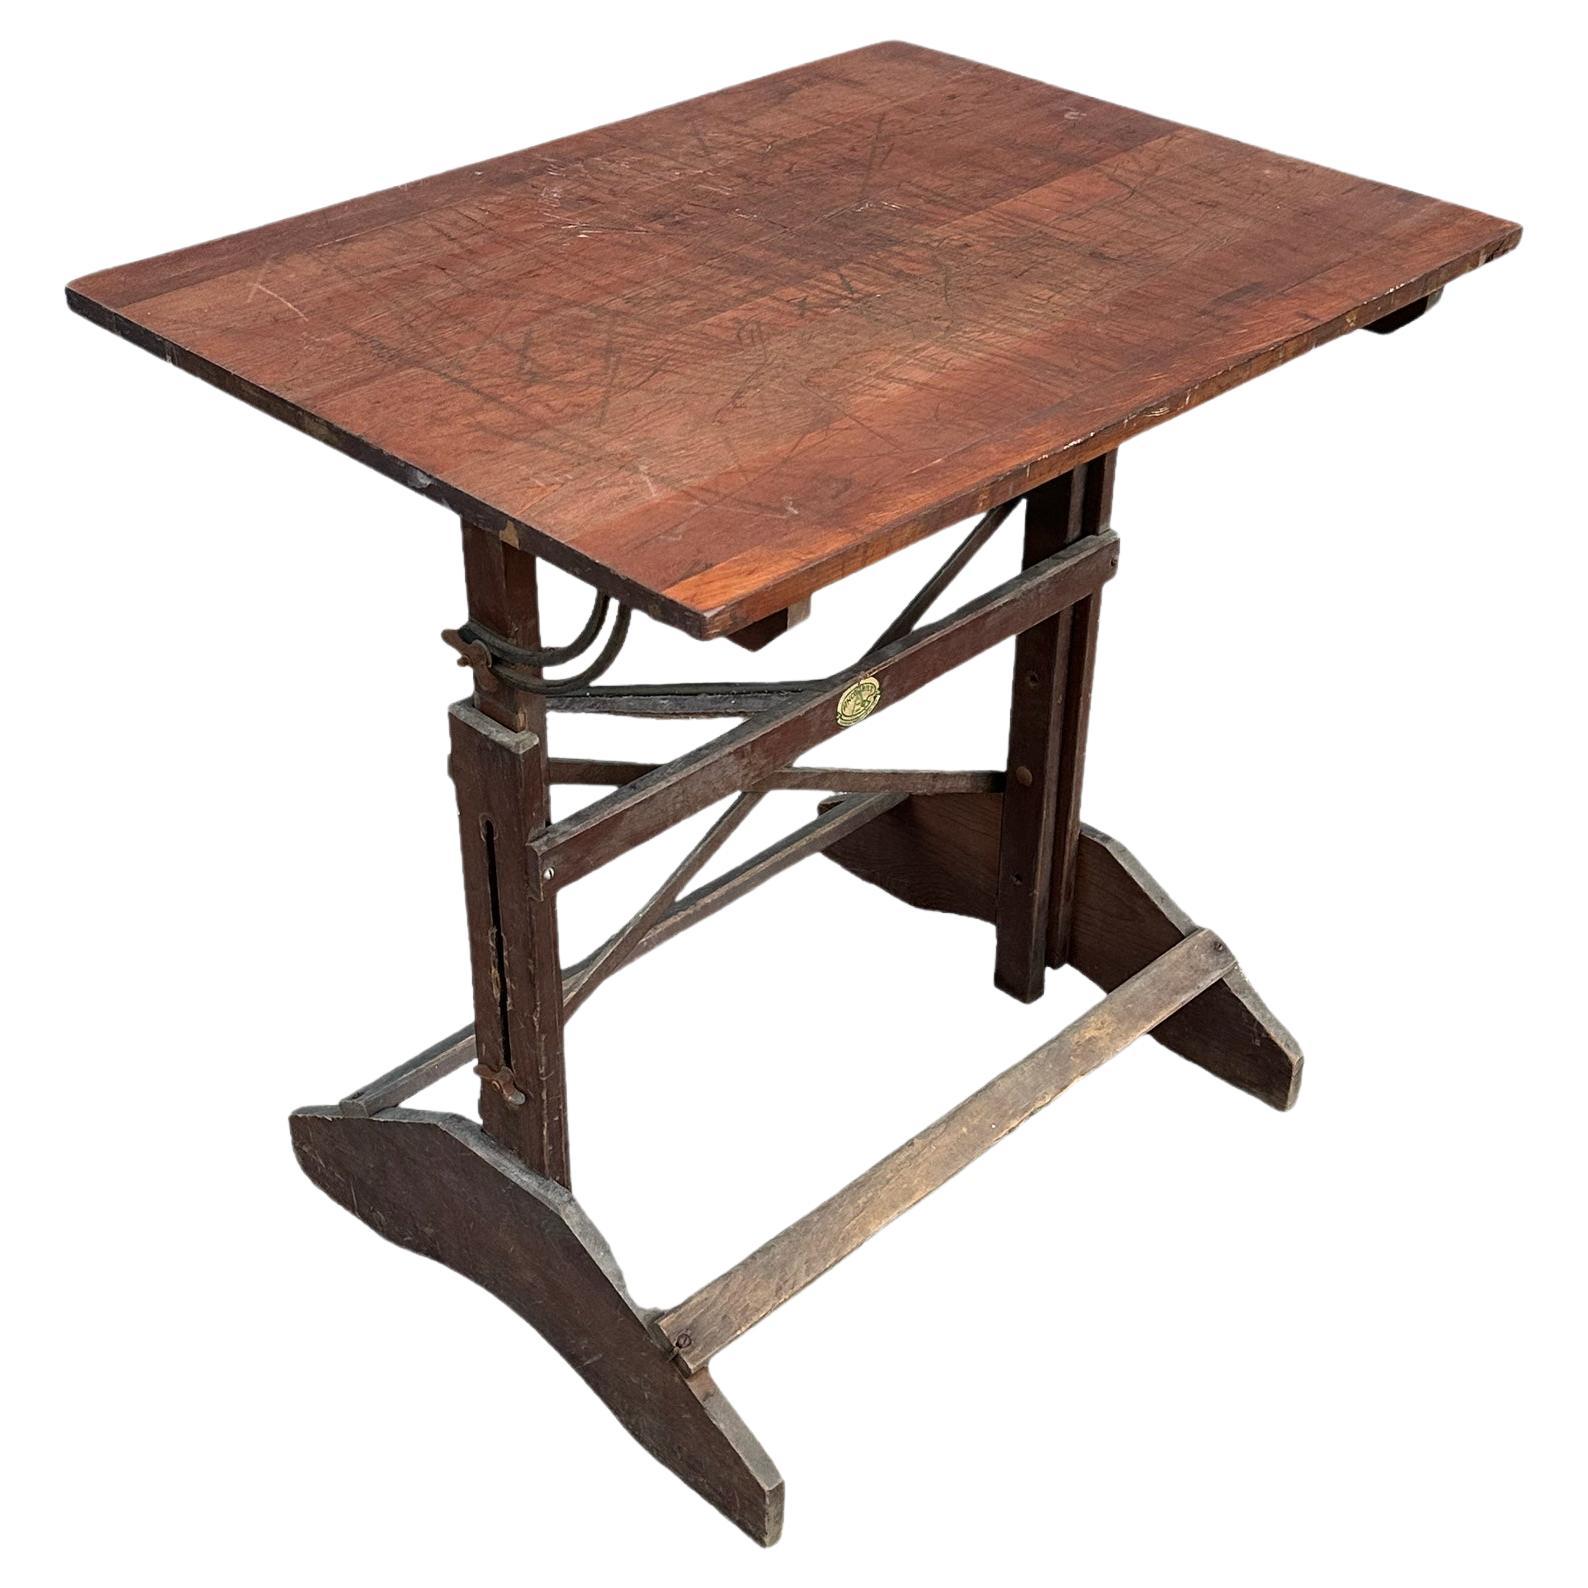 Anco Bilt Antique Solid Wood Adjustable Drafting Table